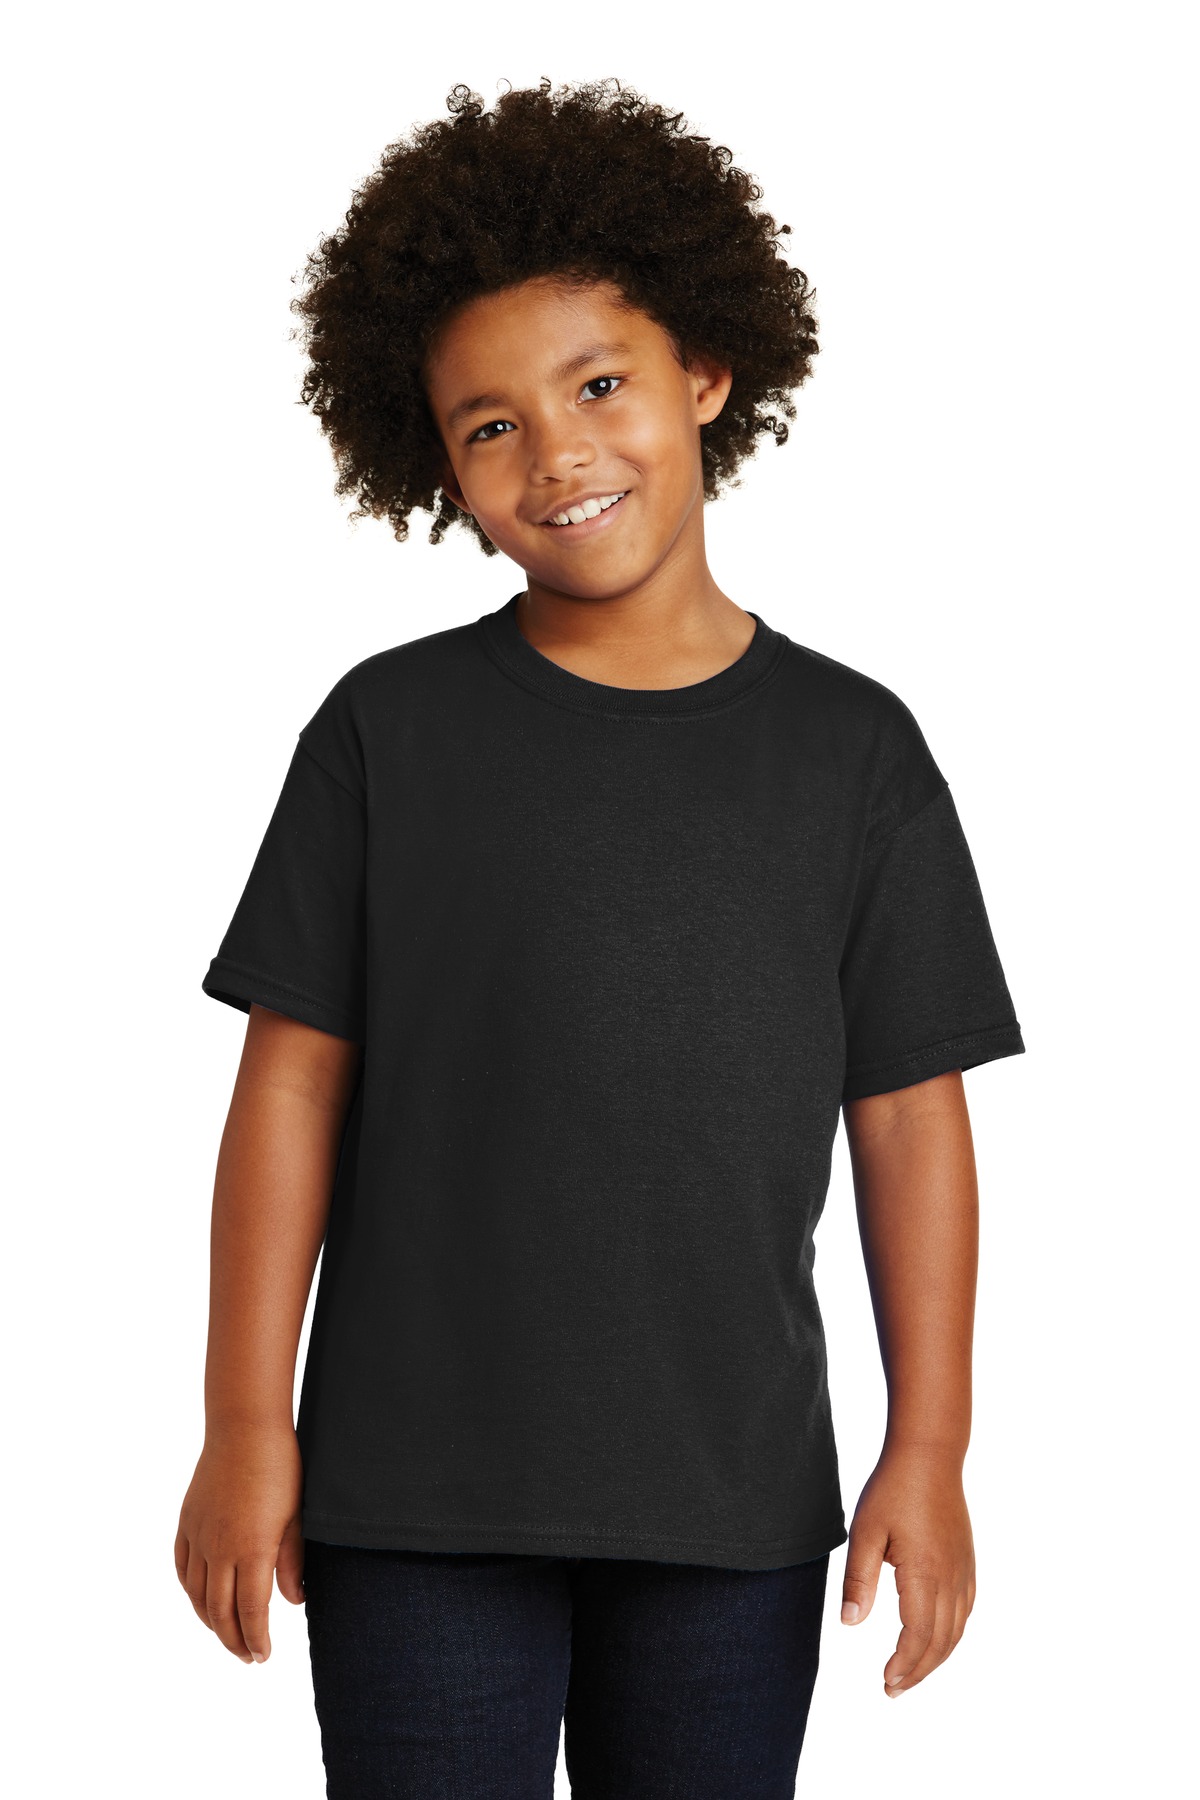 Artix - Big Boys T-Shirts and Tank Tops, up to Big Boys Size 24 - San Francisco - image 2 of 5